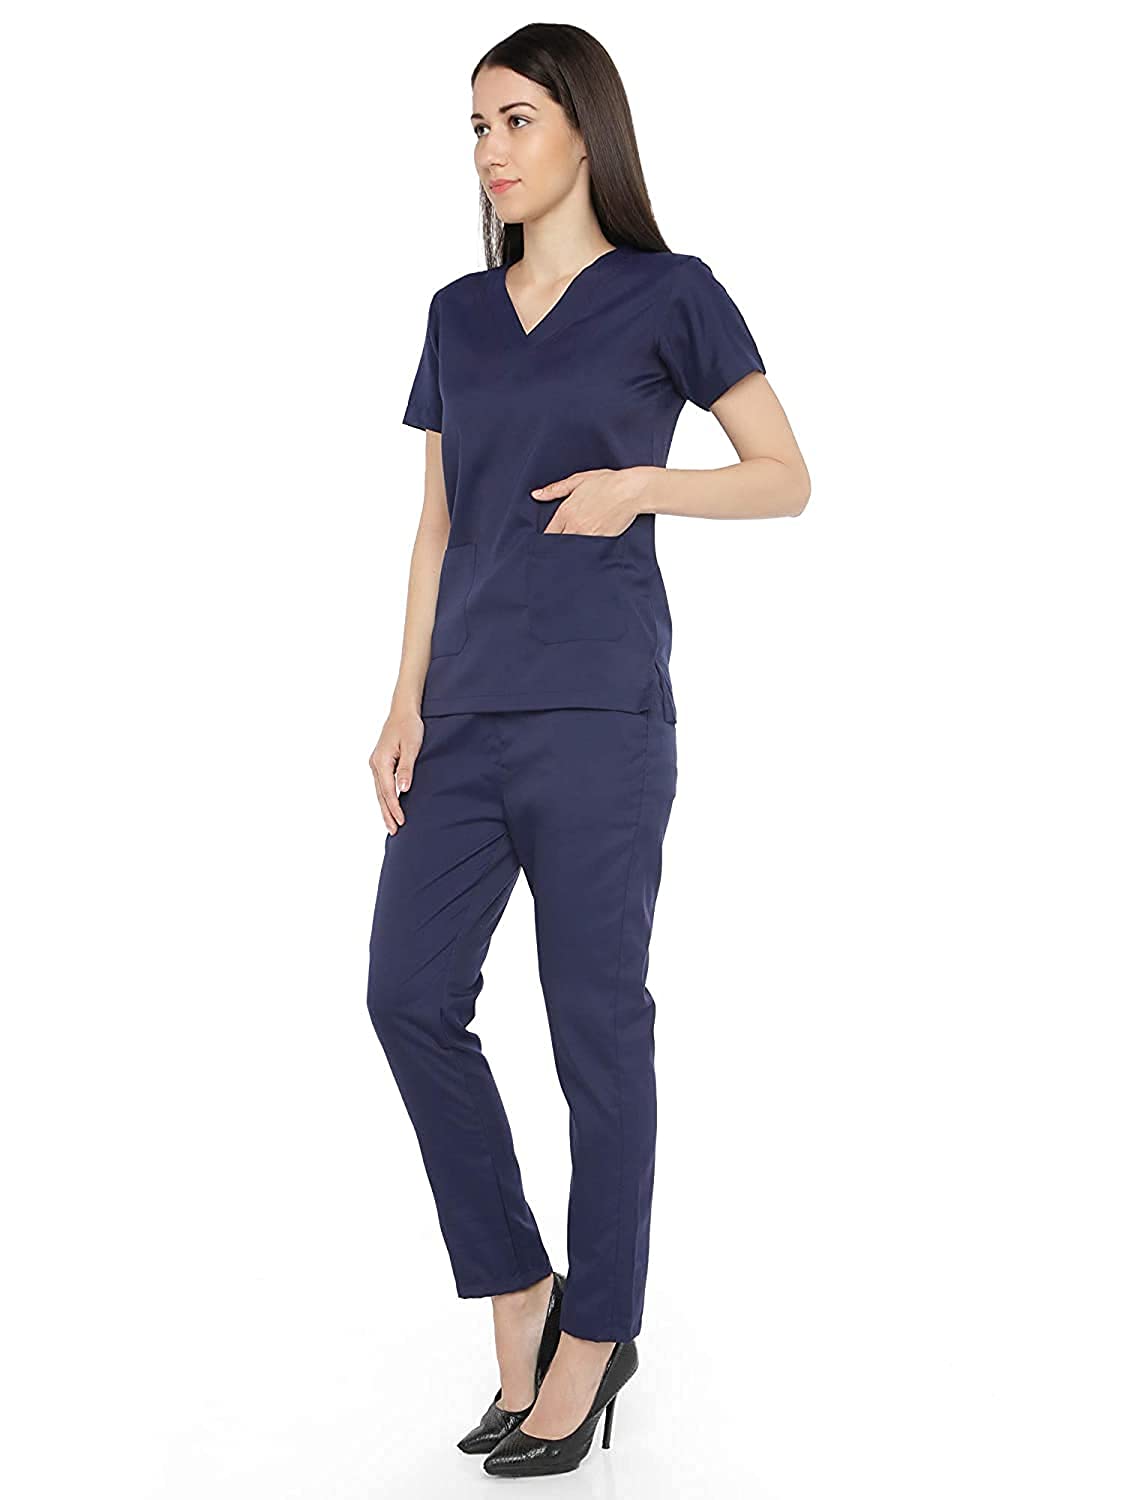 Dark Blue/Navy Blue Scrub Suits For Doctors & Nurses